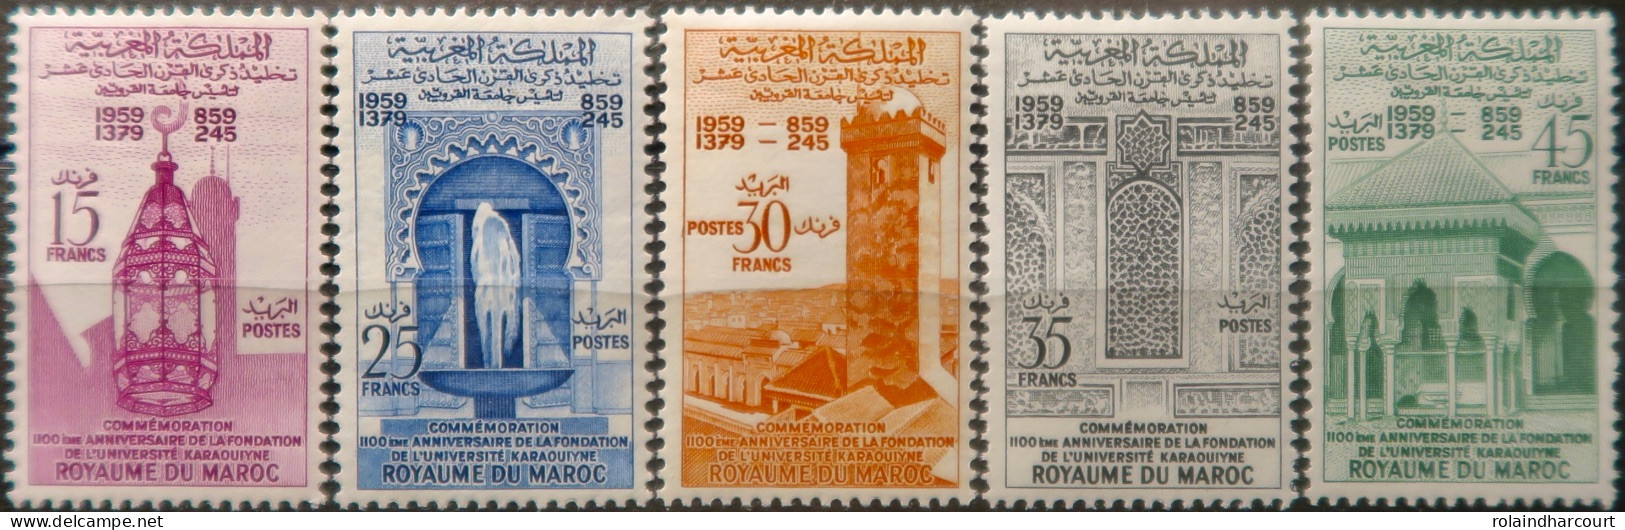 LP3844/2238 - MAROC - 1960 - SERIE COMPLETE - N°405 à 409 NEUFS* - Marruecos (1956-...)